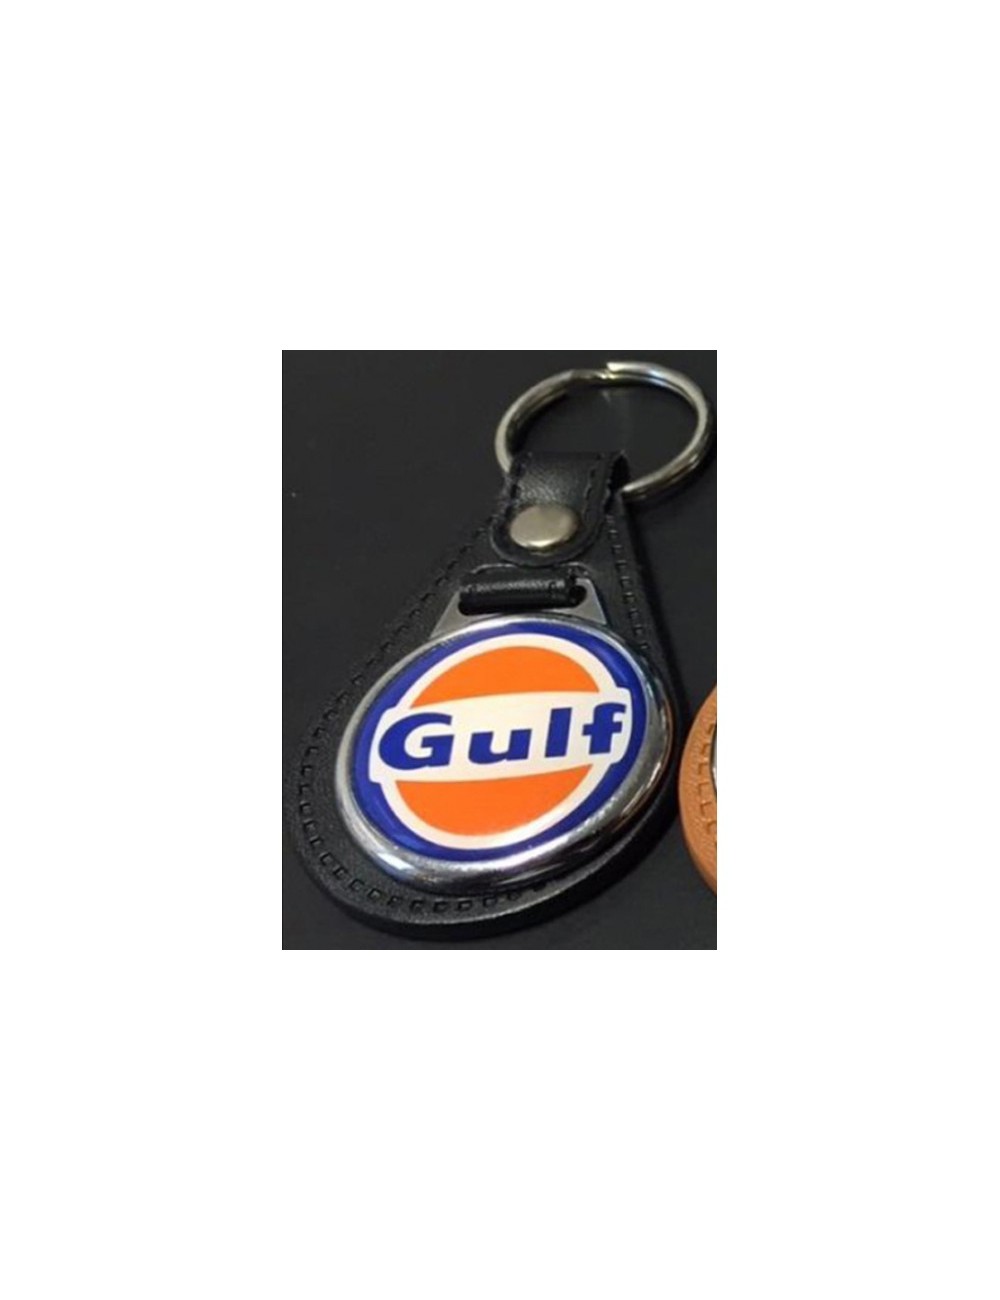 Porte clef Gulf noir